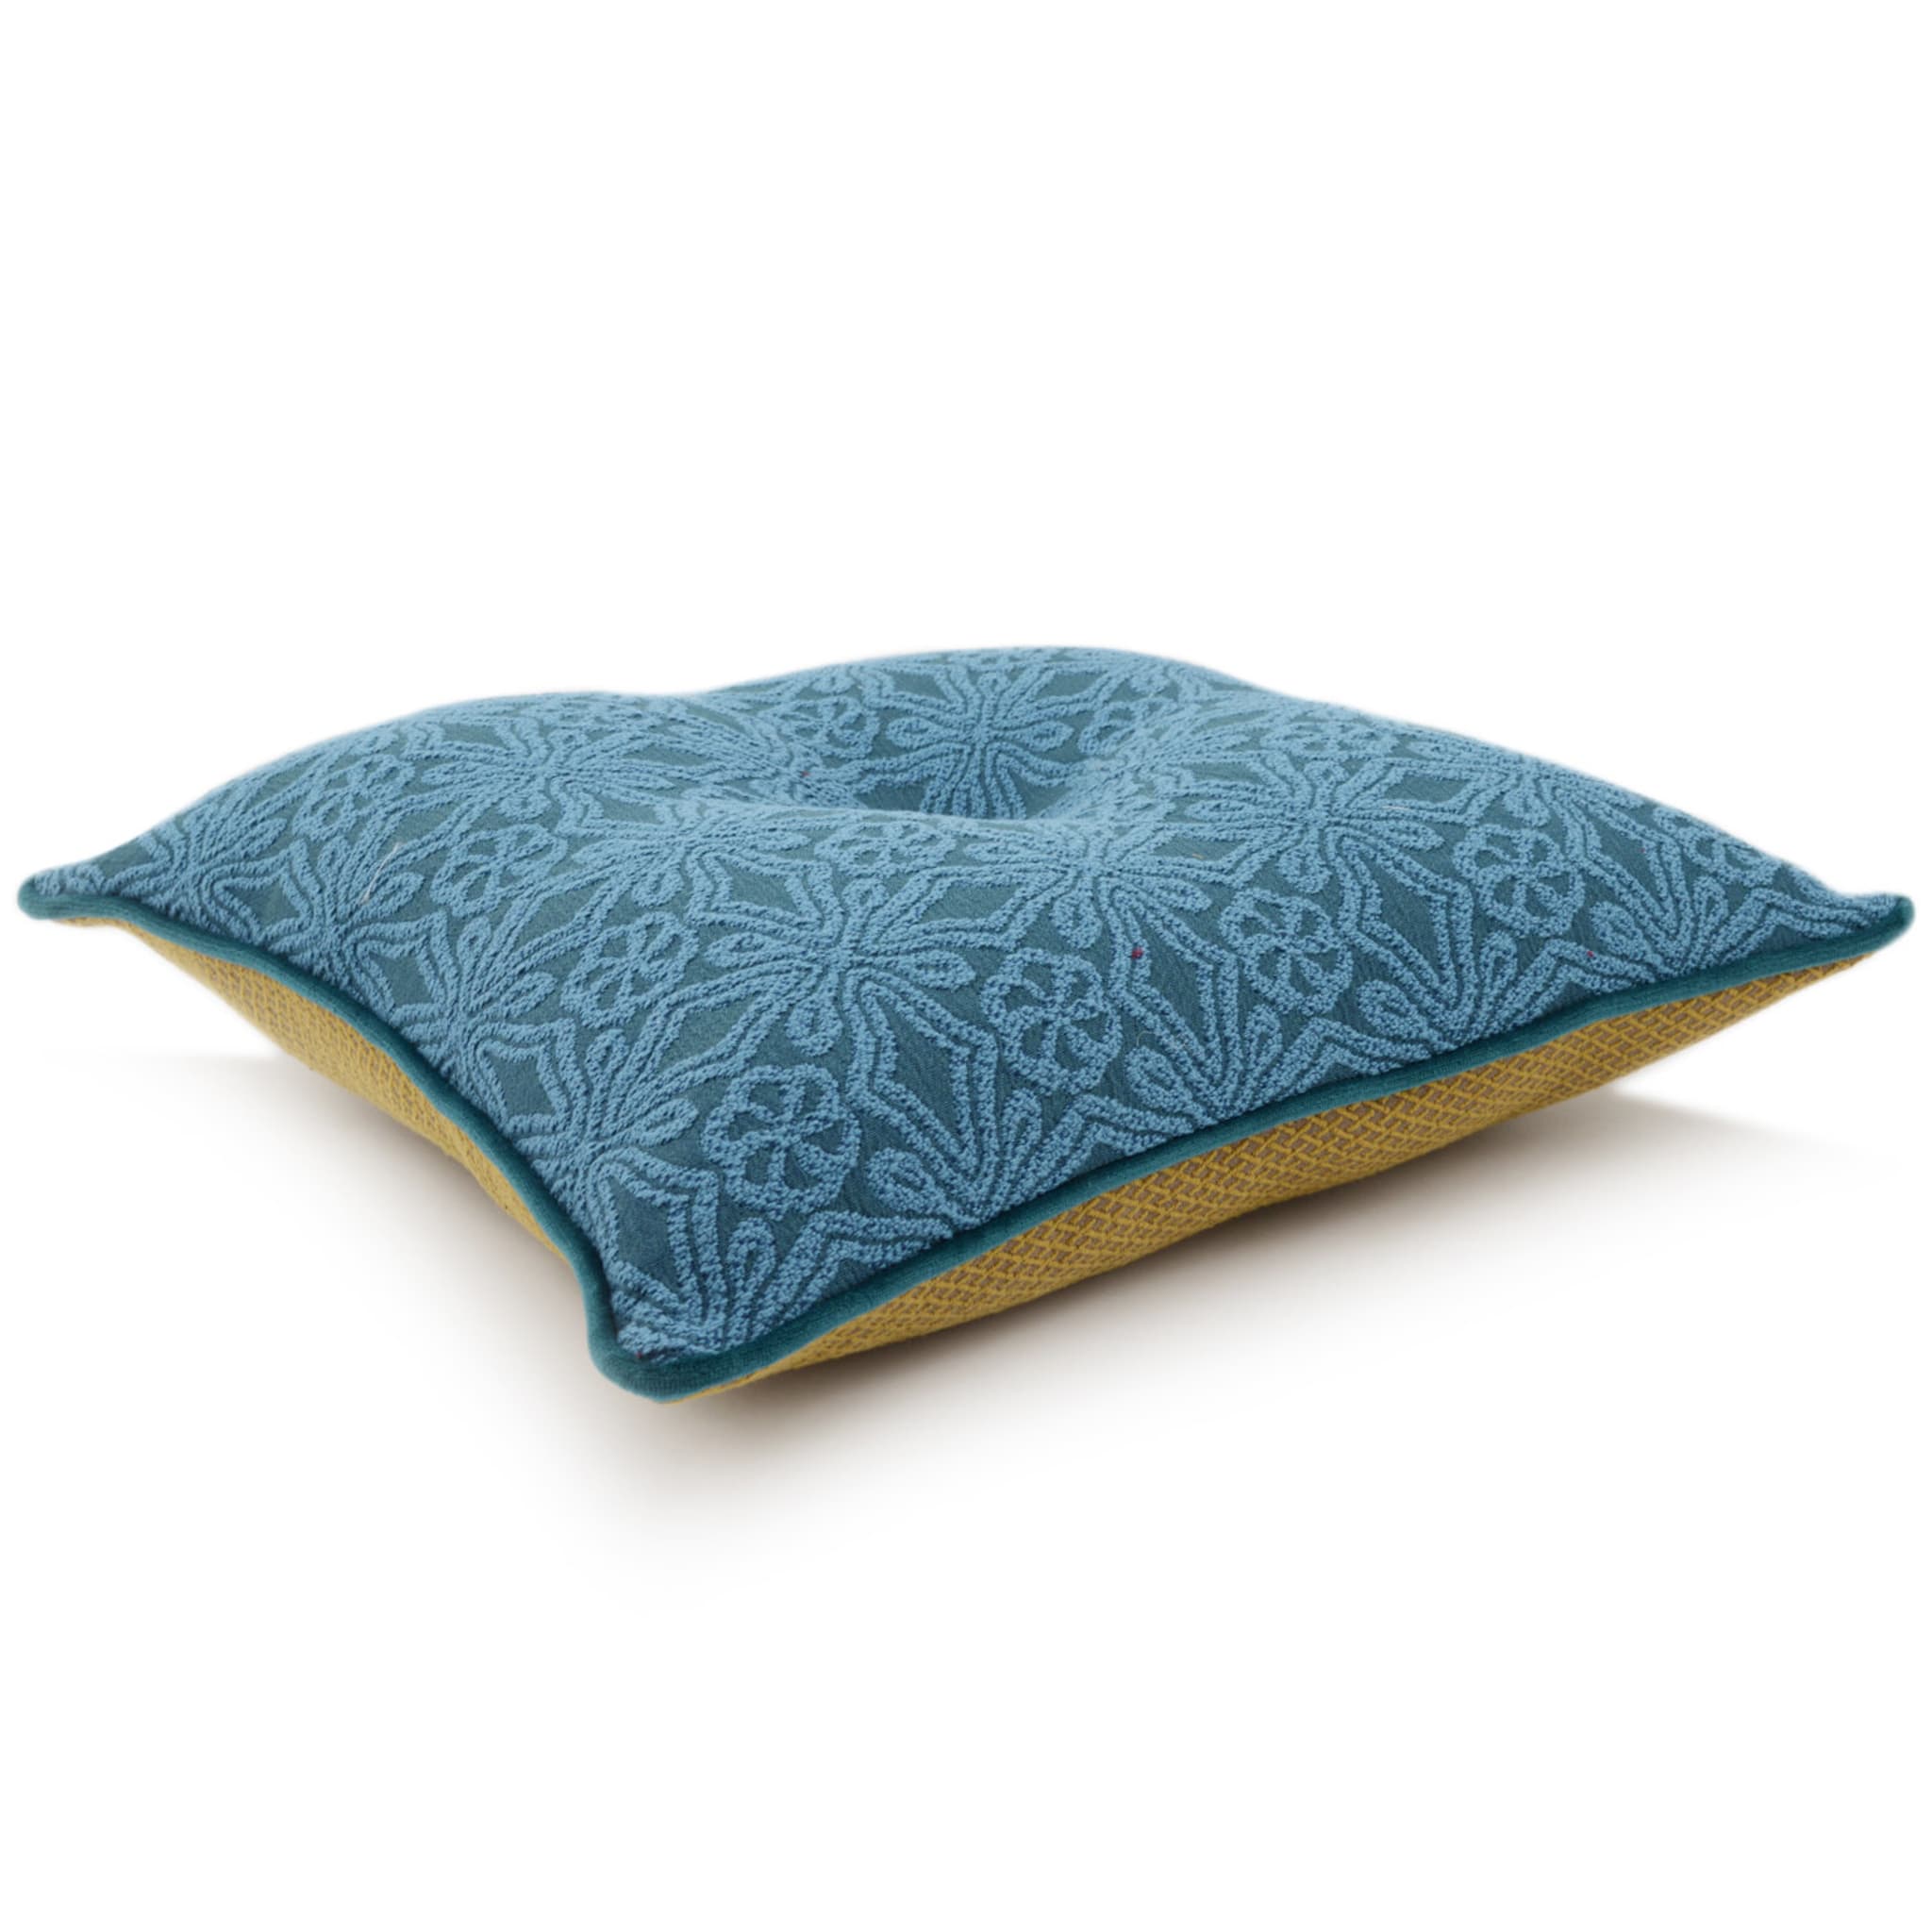 Light Blue Carré Cushion in floreal jacquard fabric - Alternative view 2